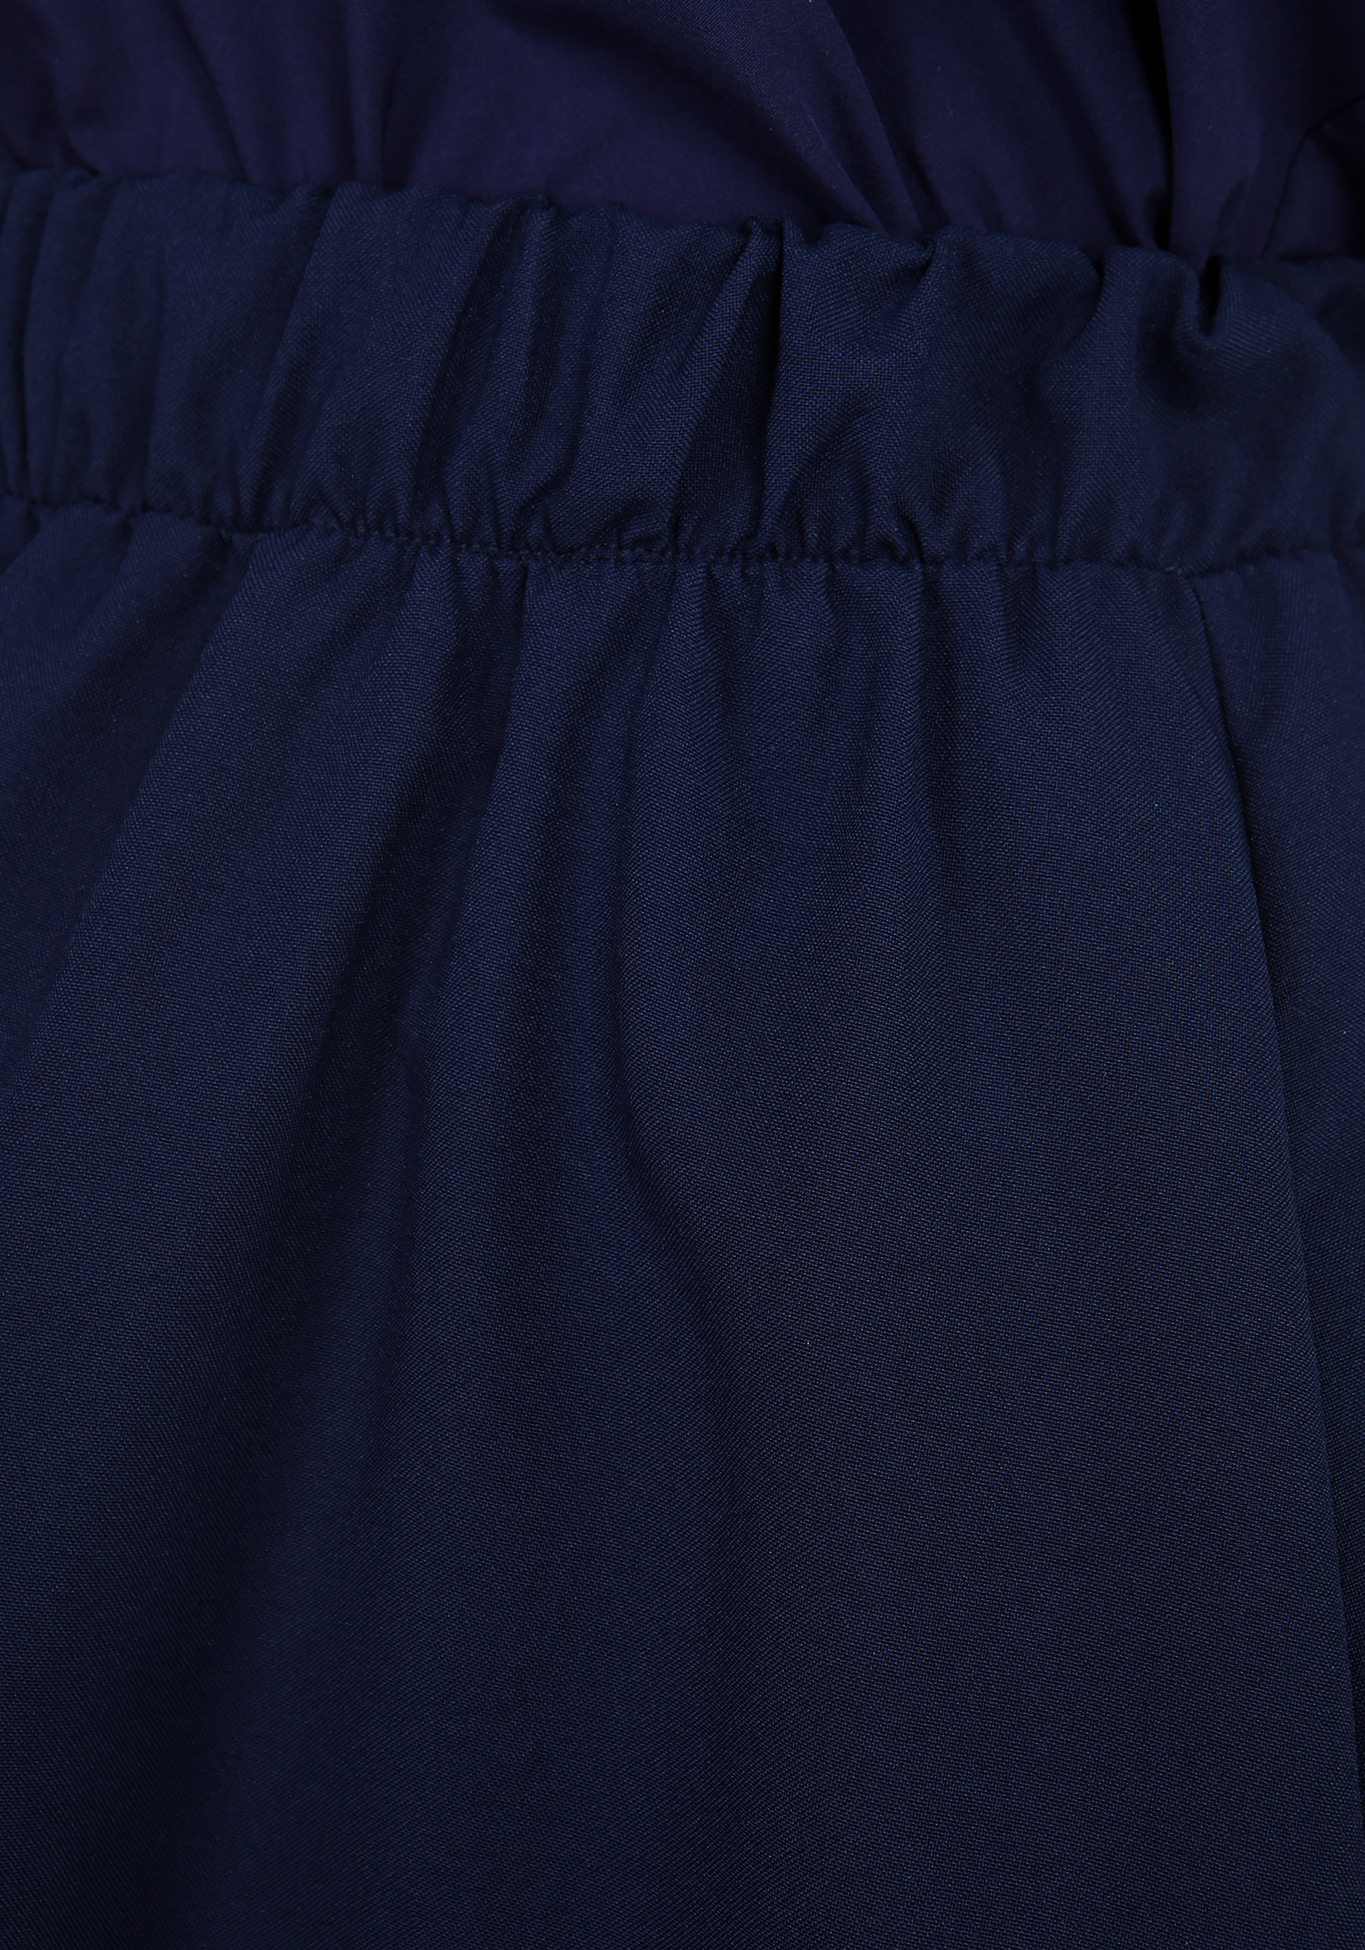 Юбка раслешенная на резинке Simple Story, размер 50, цвет темно-синий - фото 8